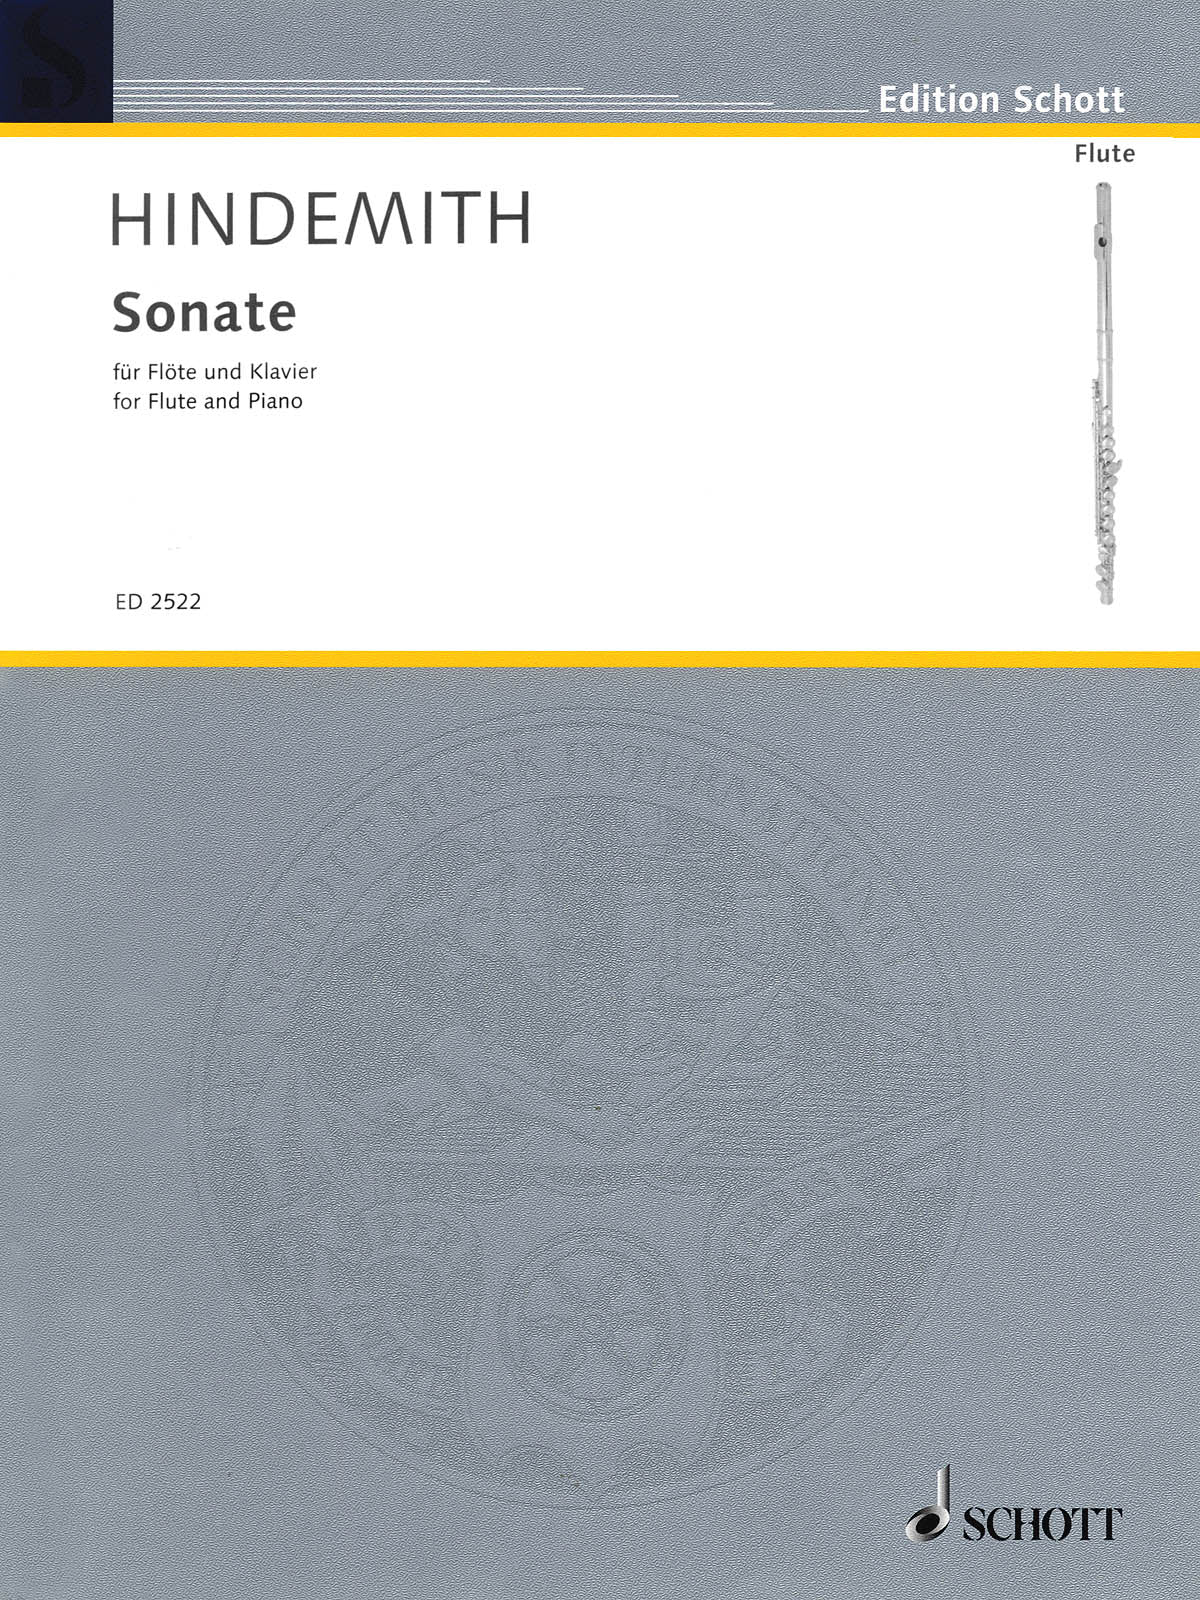 Hindemith: Flute Sonata